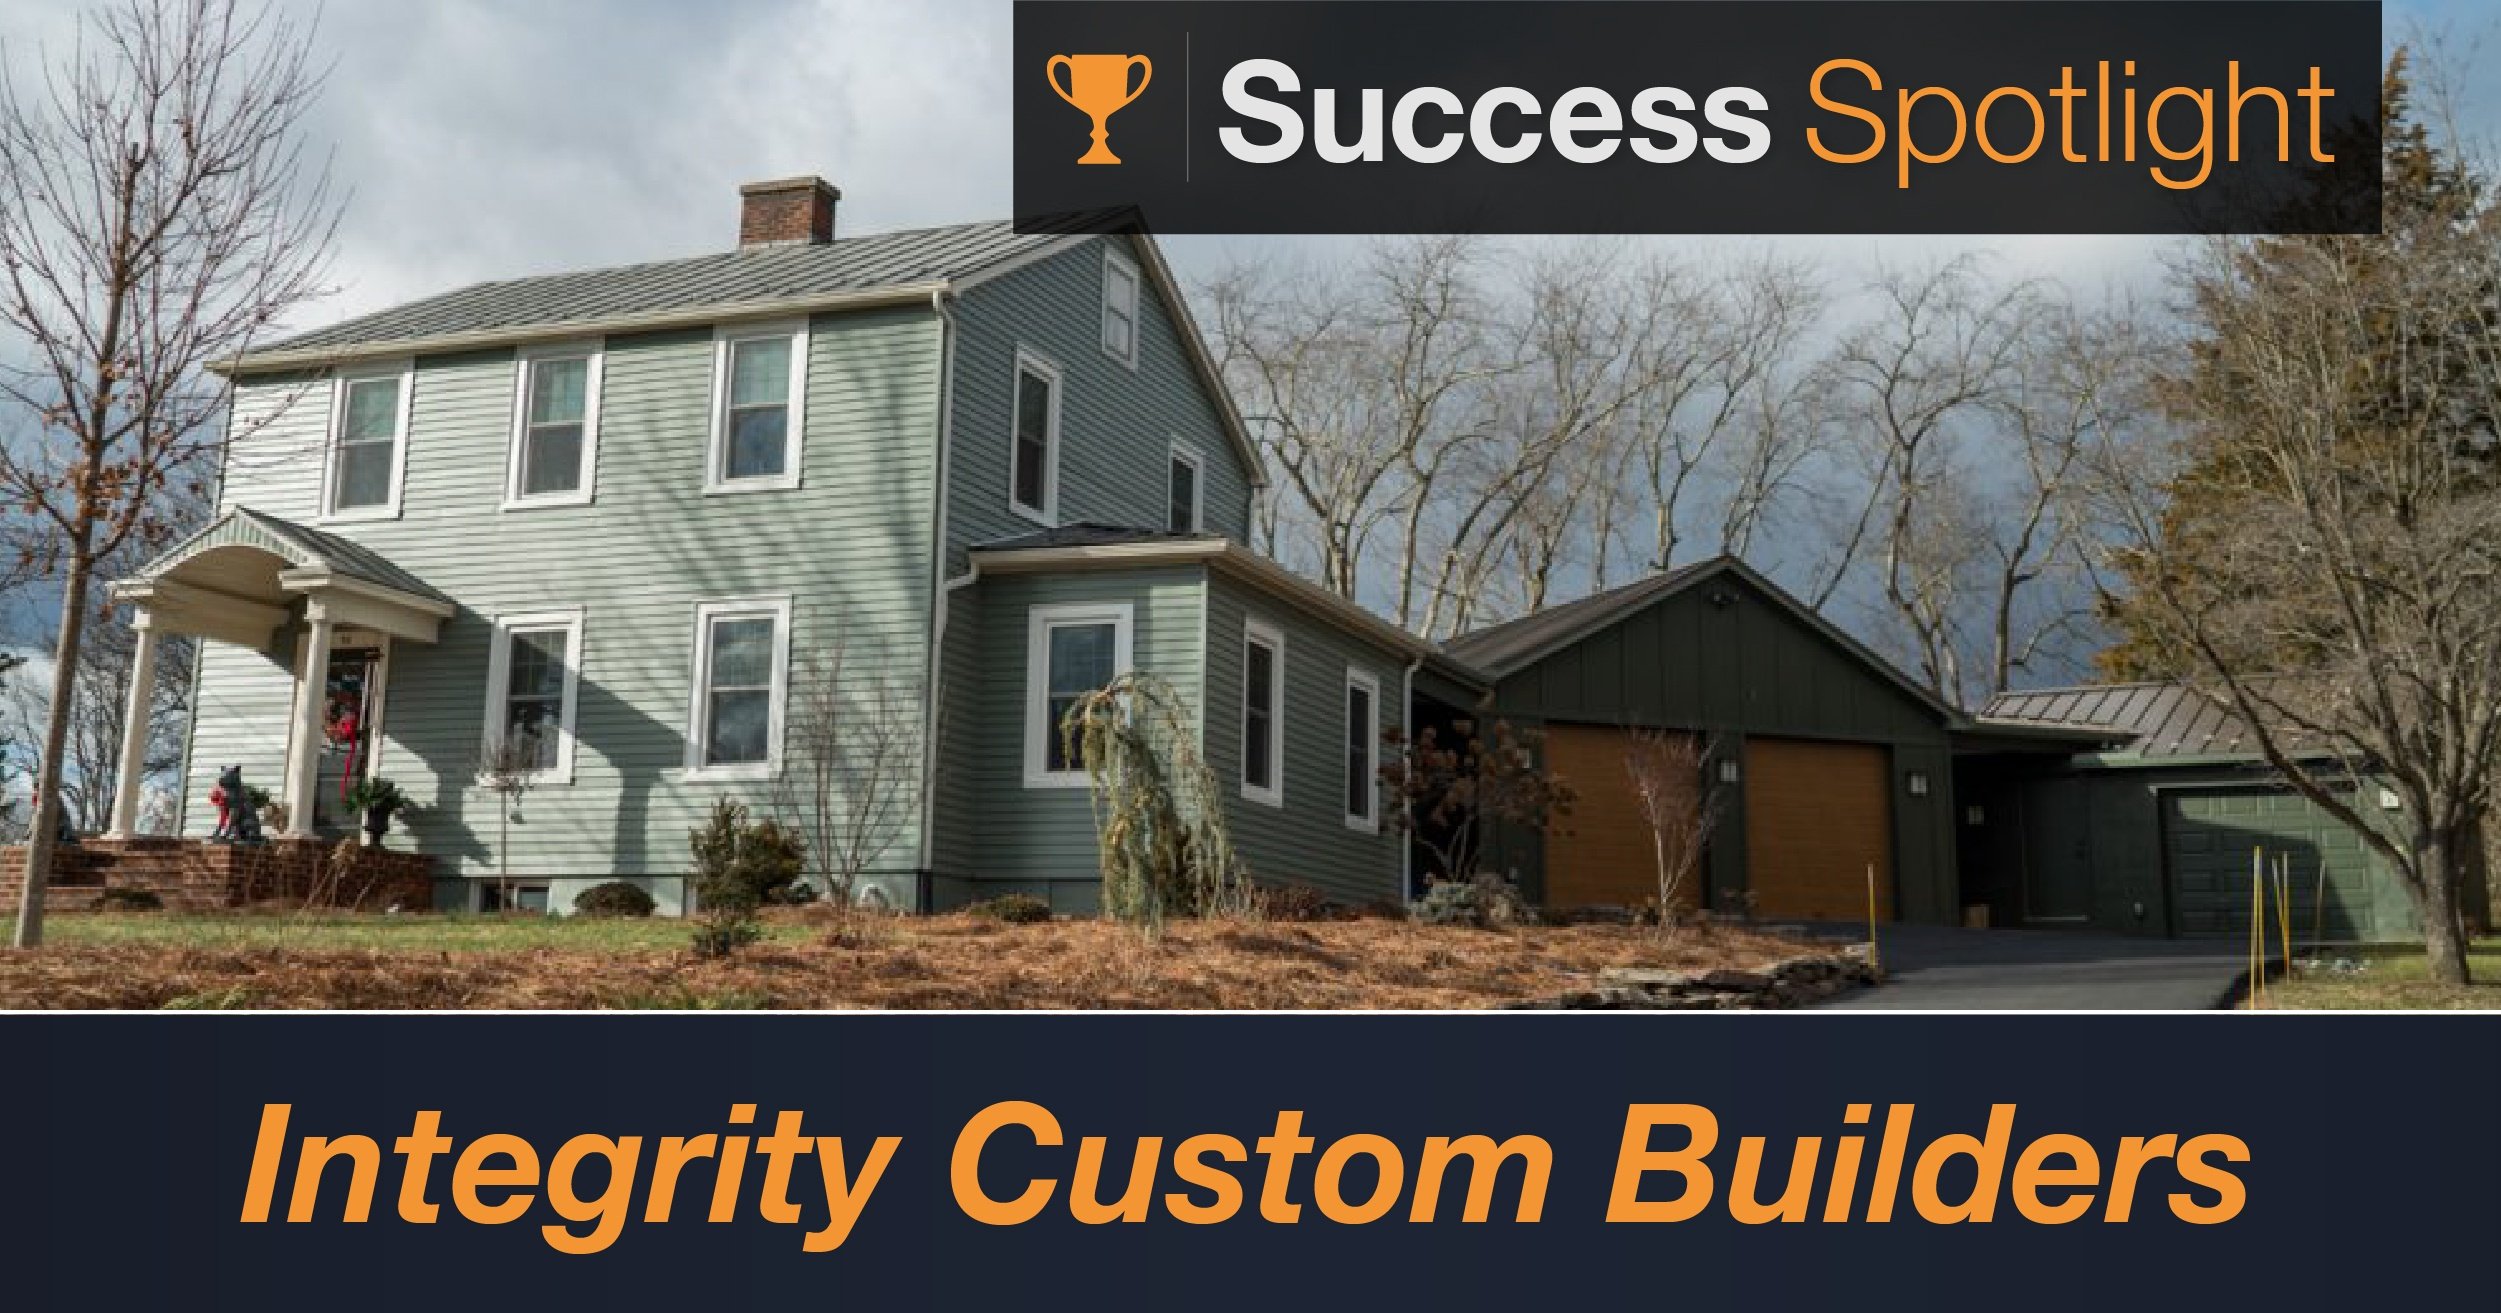 Success Spotlight: Integrity Custom Builders